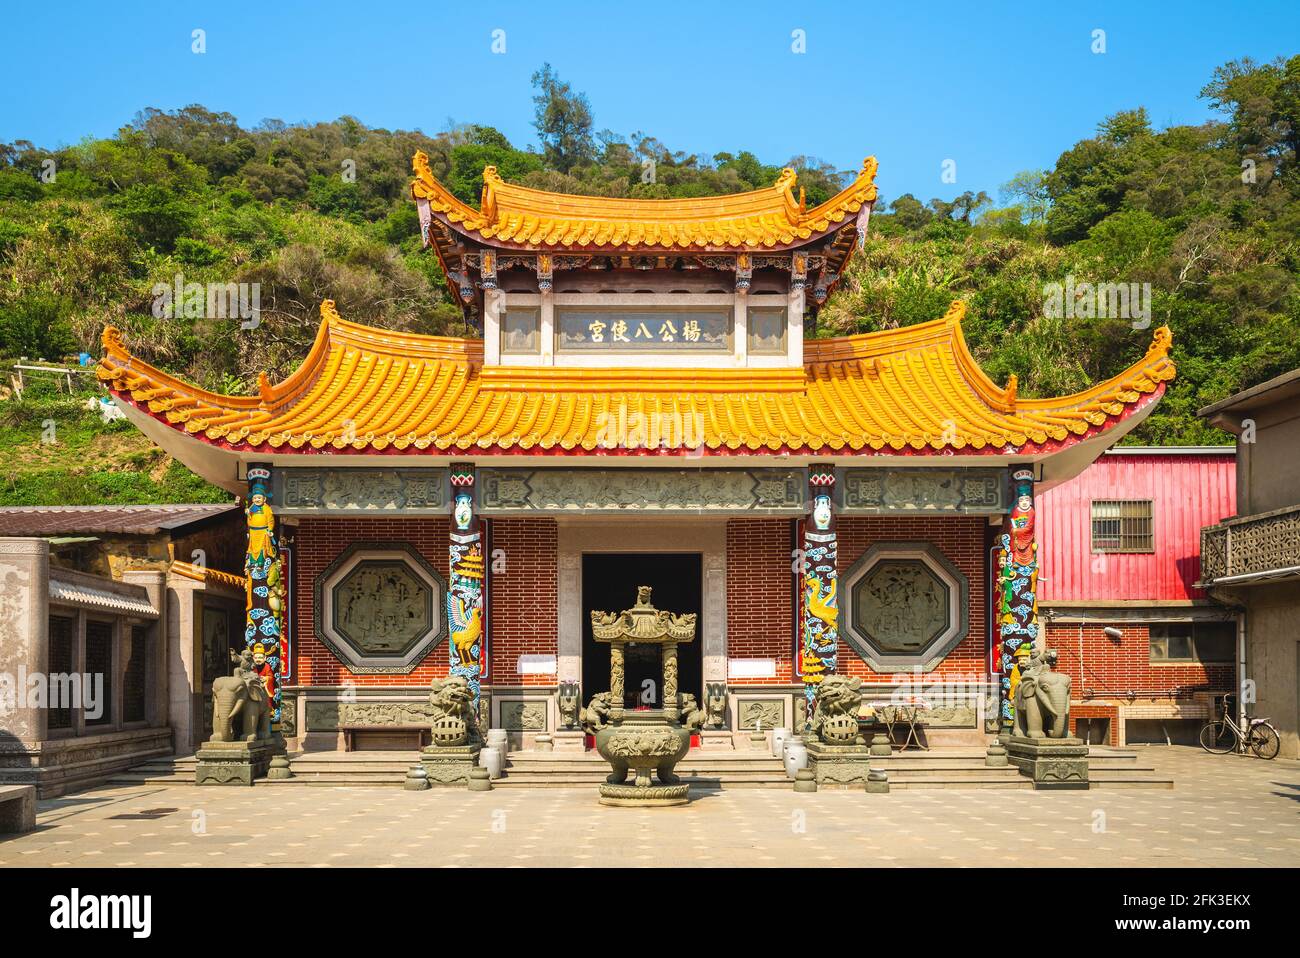 Yang gong BA shi Tempel in Beigan, matsu, taiwan. Übersetzung: yang gong BA shi Tempel, der Name dieses Tempels Stockfoto